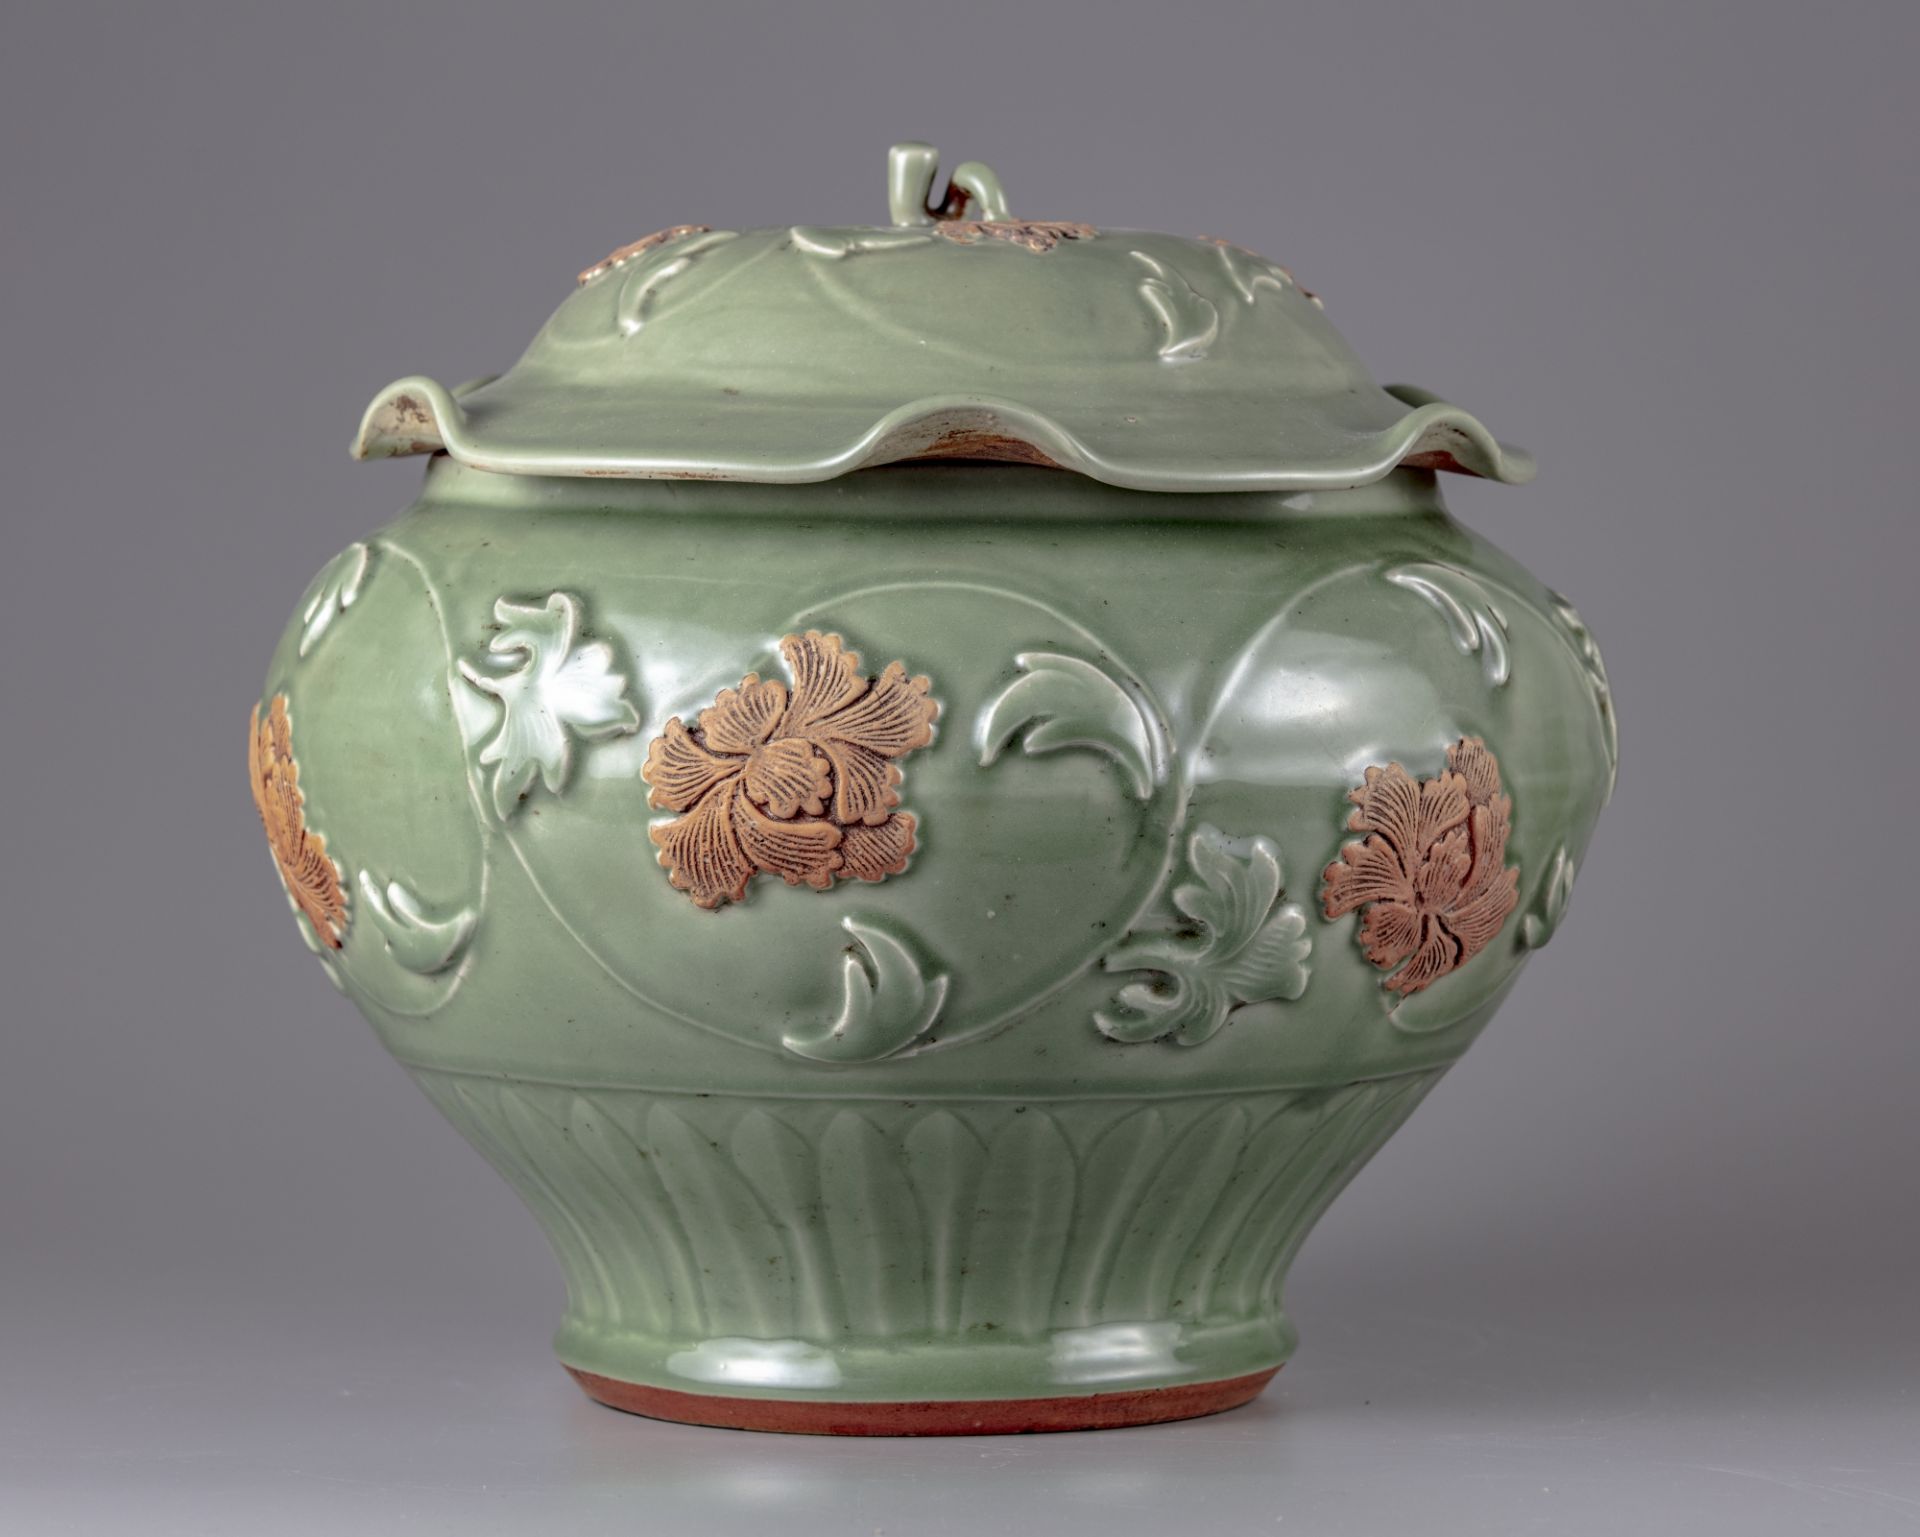 A celadon glazed jar and cover